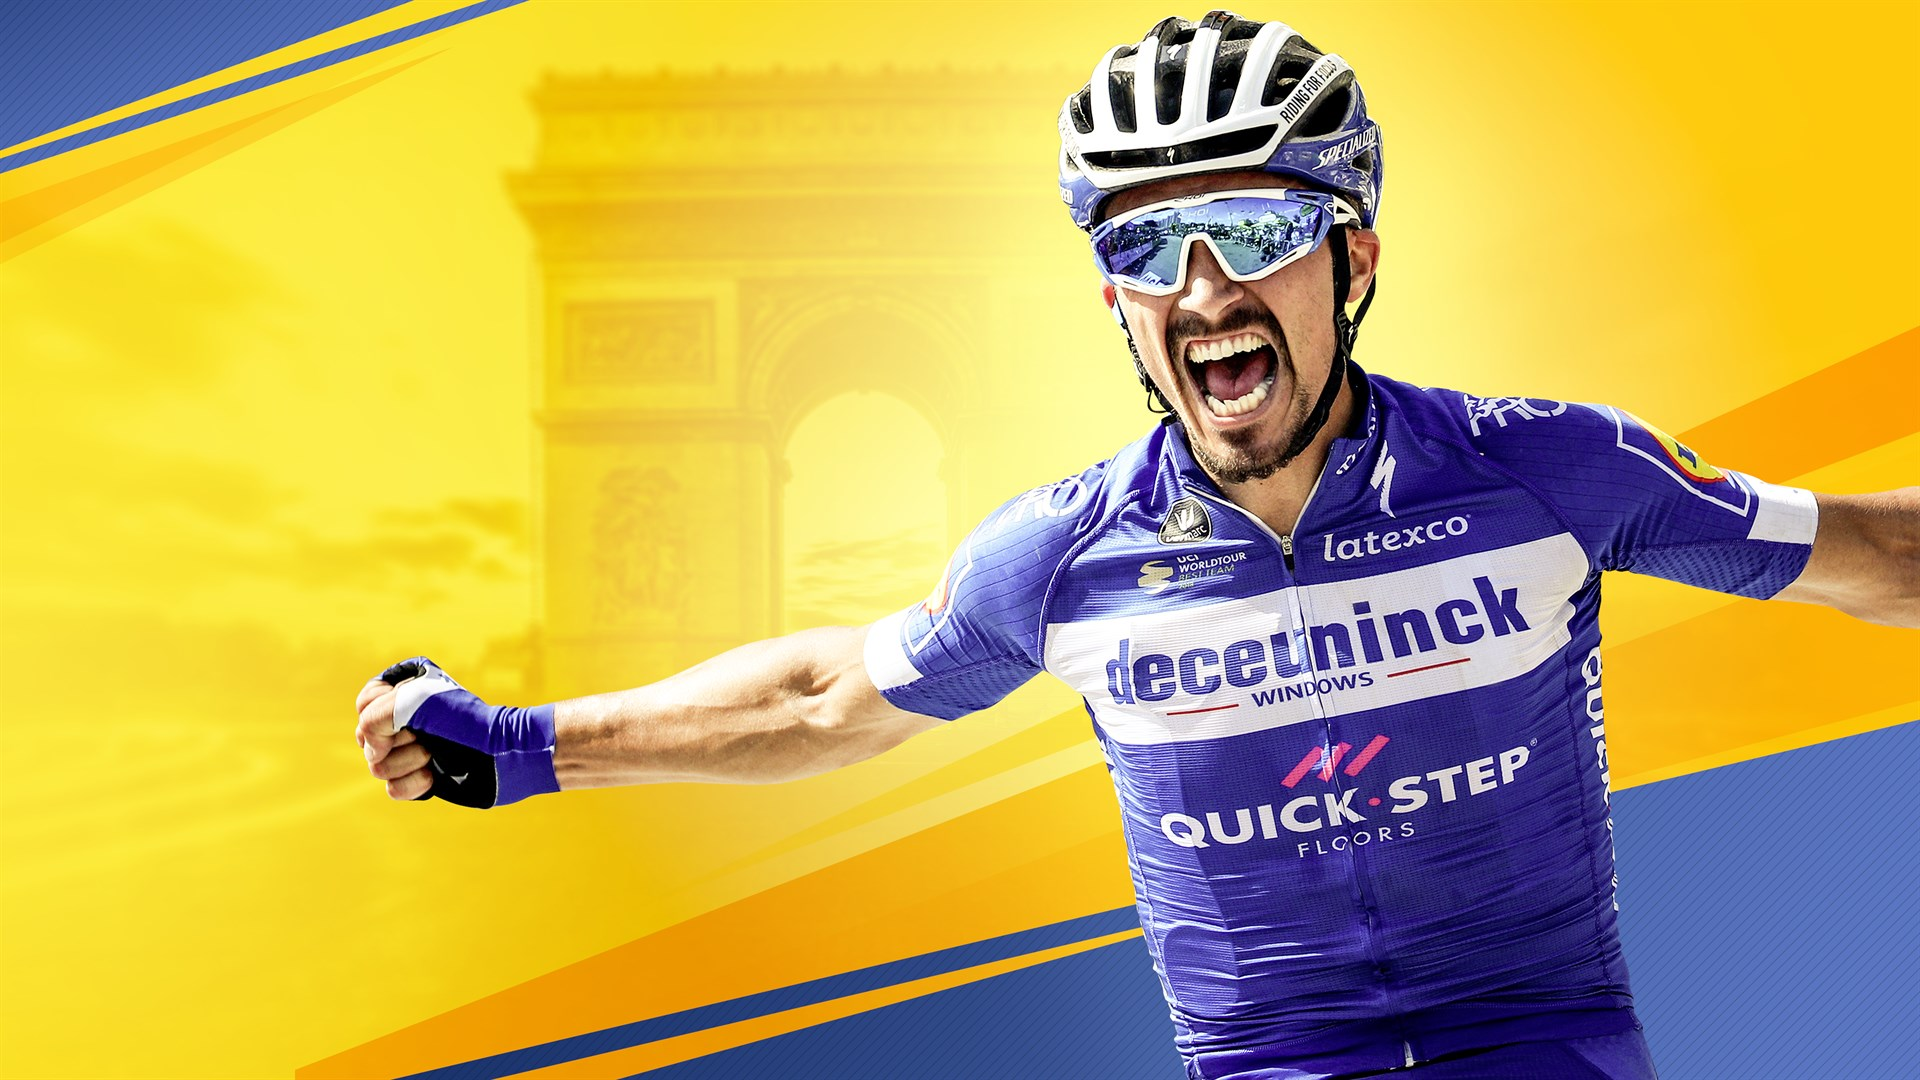 Xbox One Tour De France 2020 配信 ツールドフランス購入自転車レース Wpteq